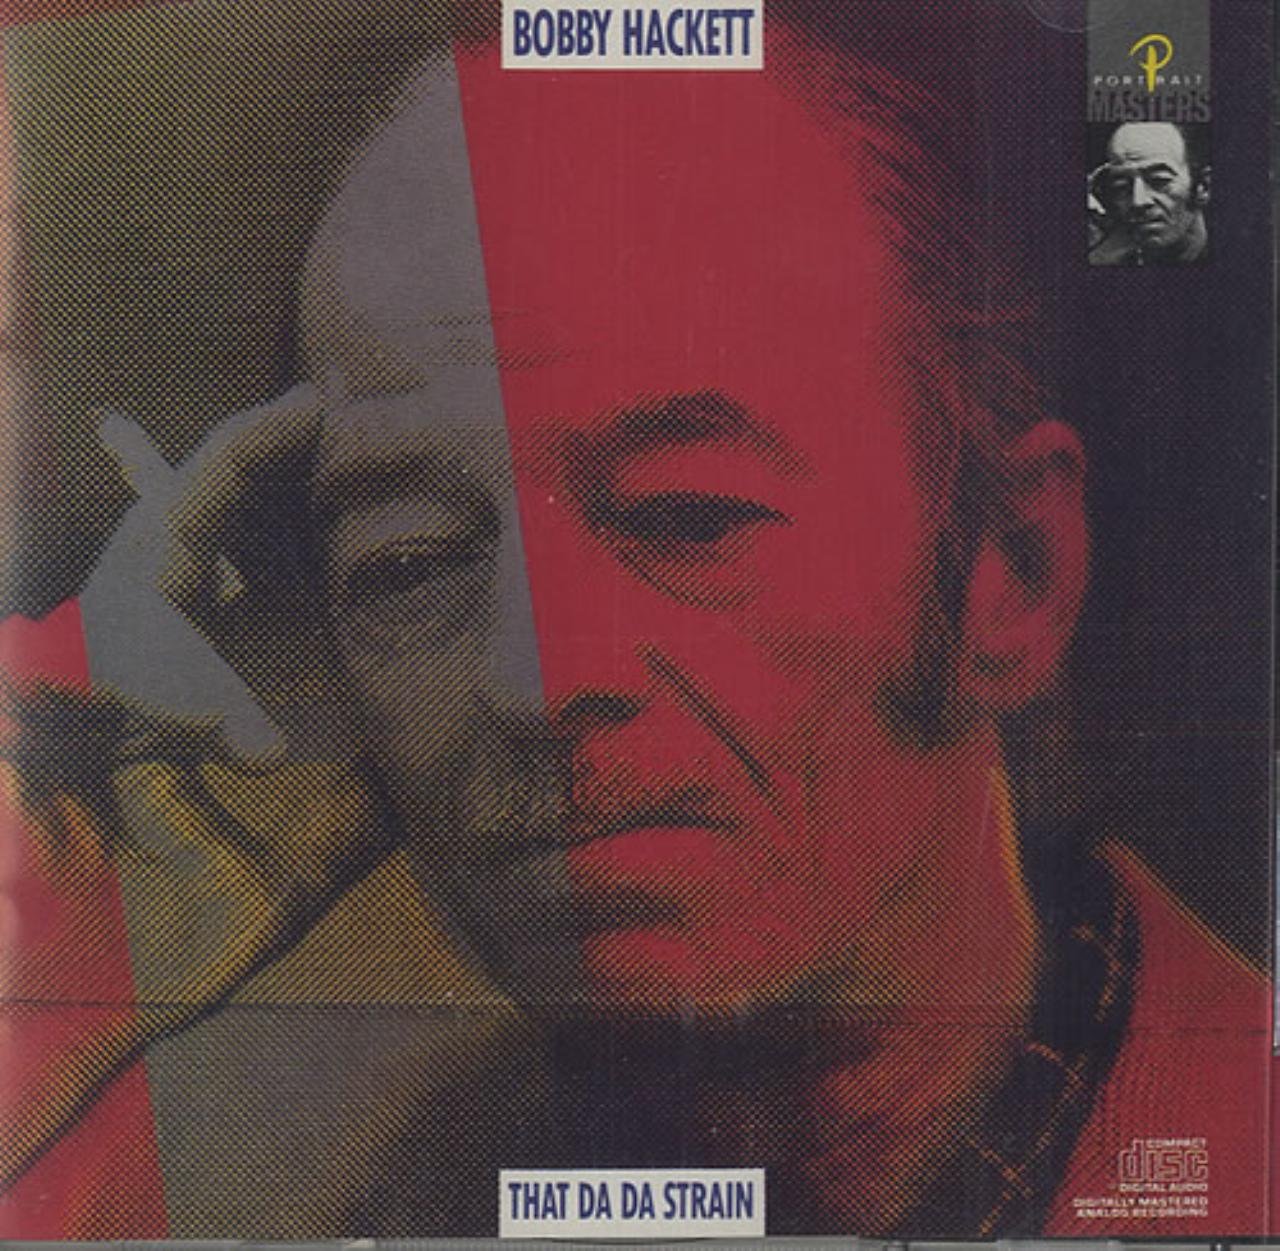 Bobby Hackett- That Da Da Strain - Darkside Records